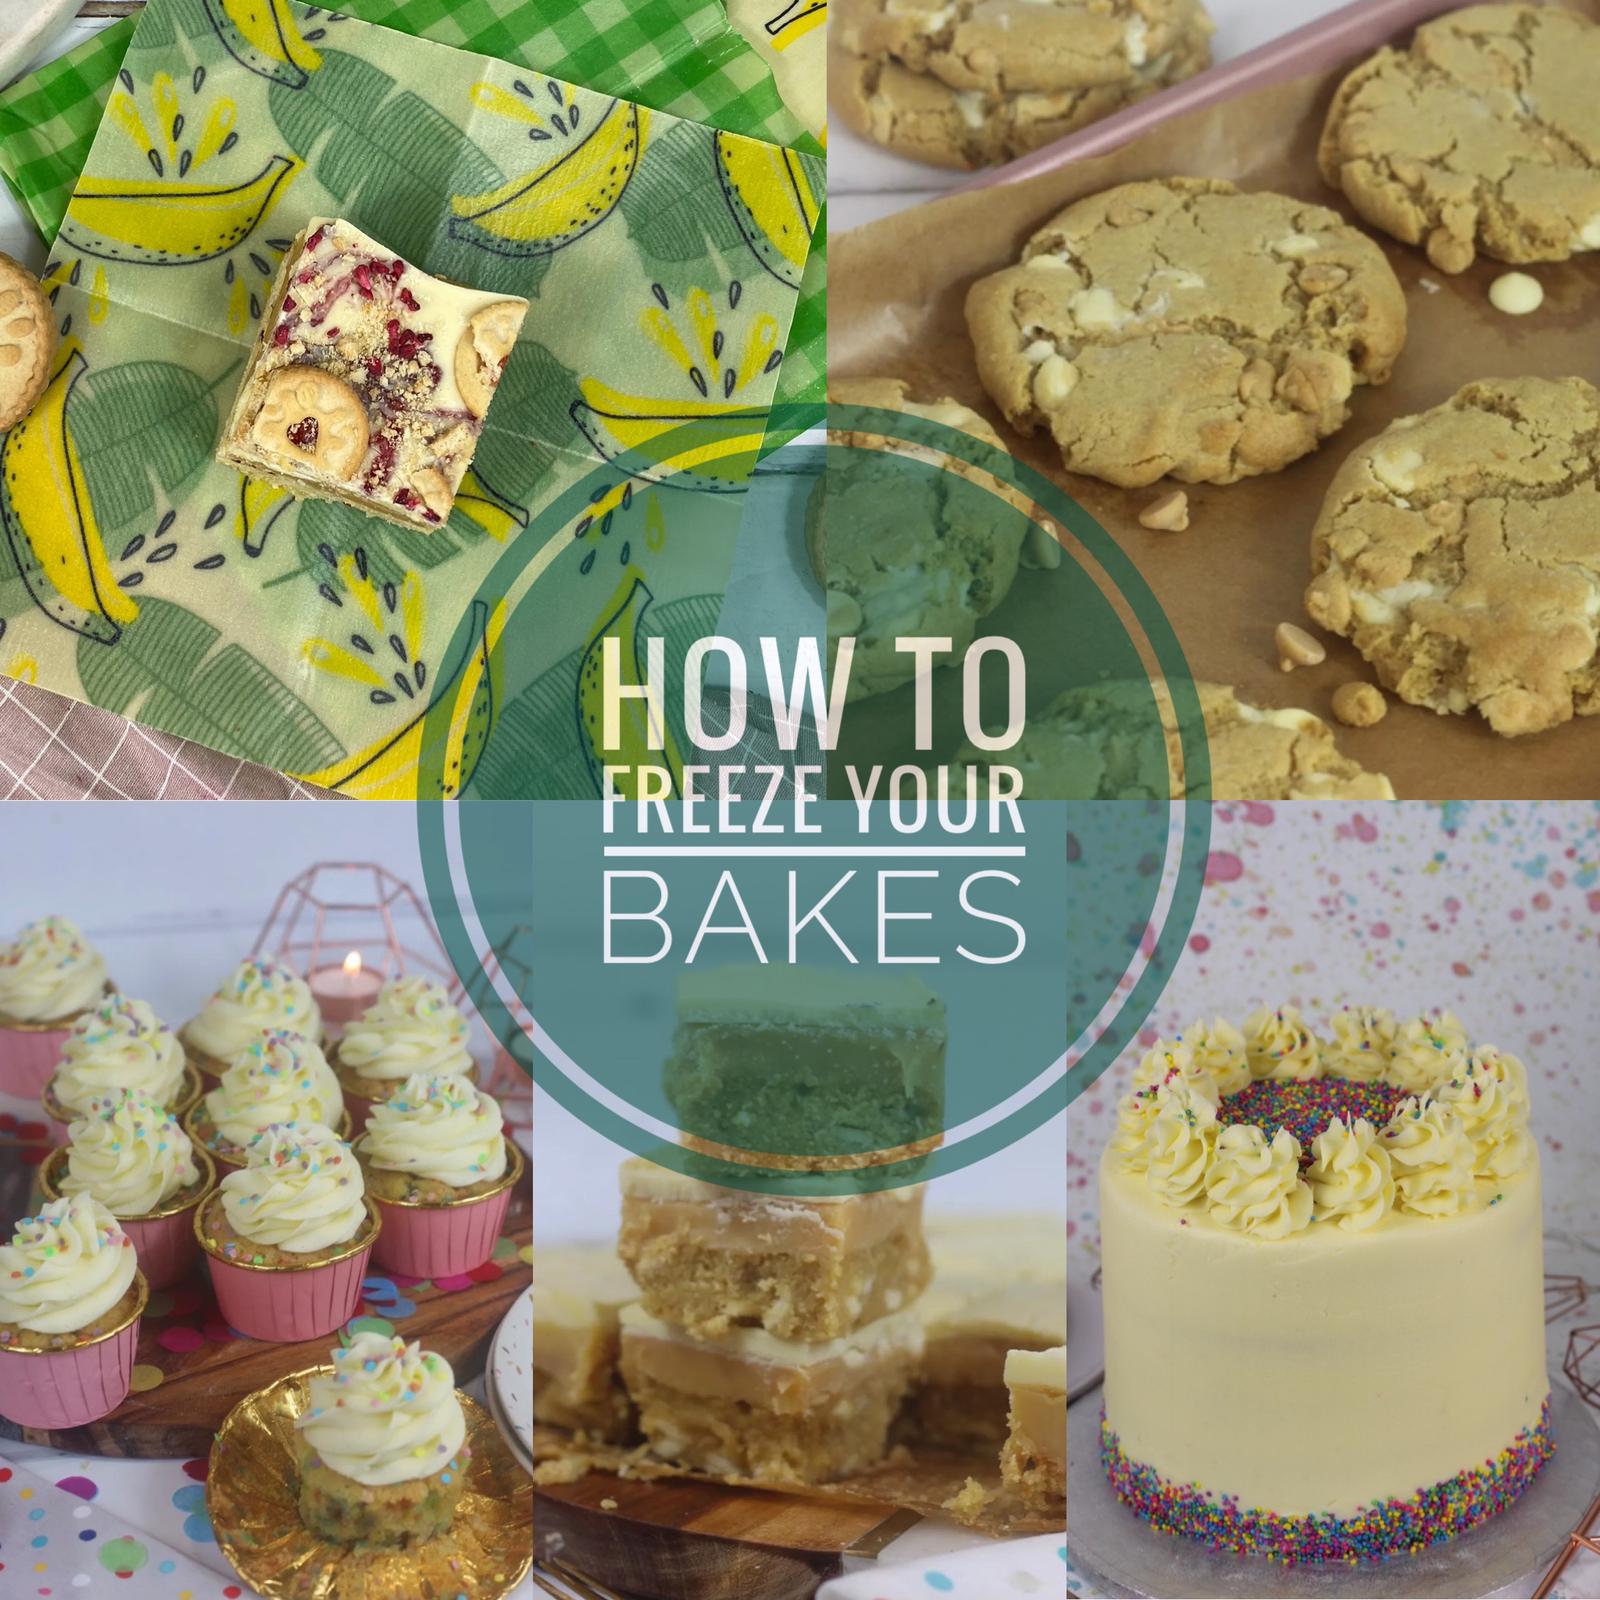 How to Freeze Cake